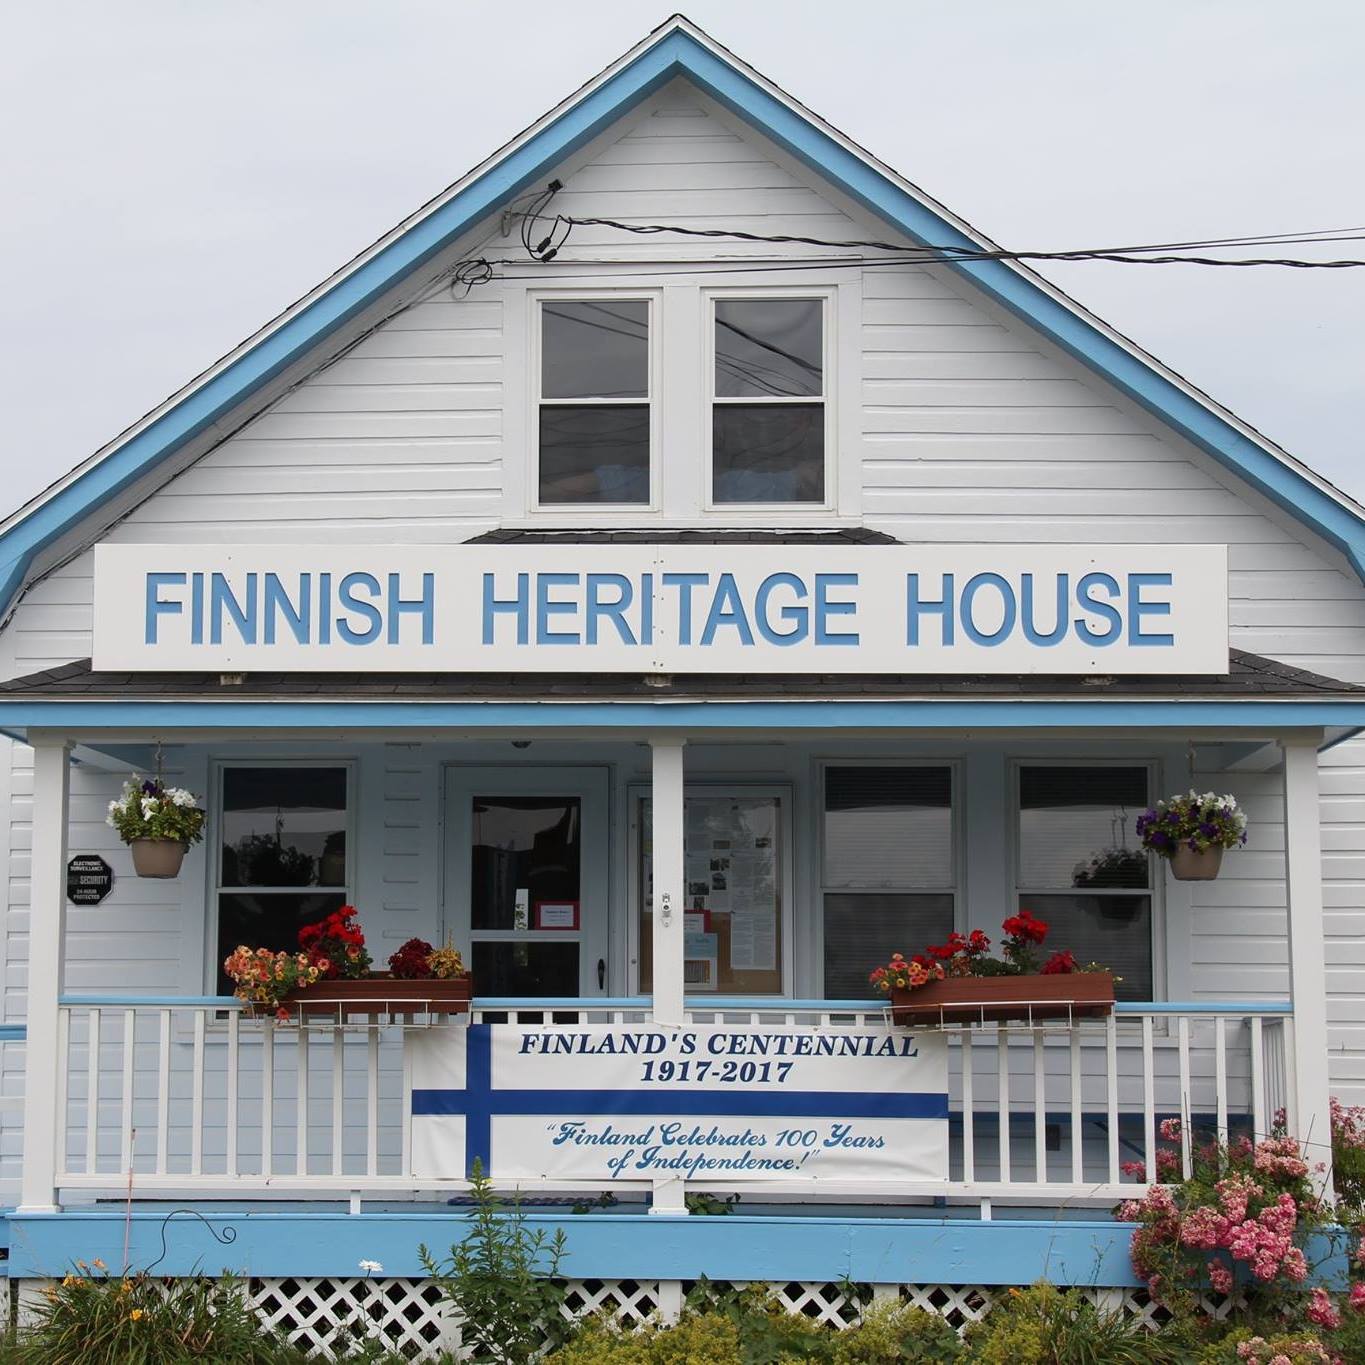 Finnish Organizations in USA - Finnish Heritage House